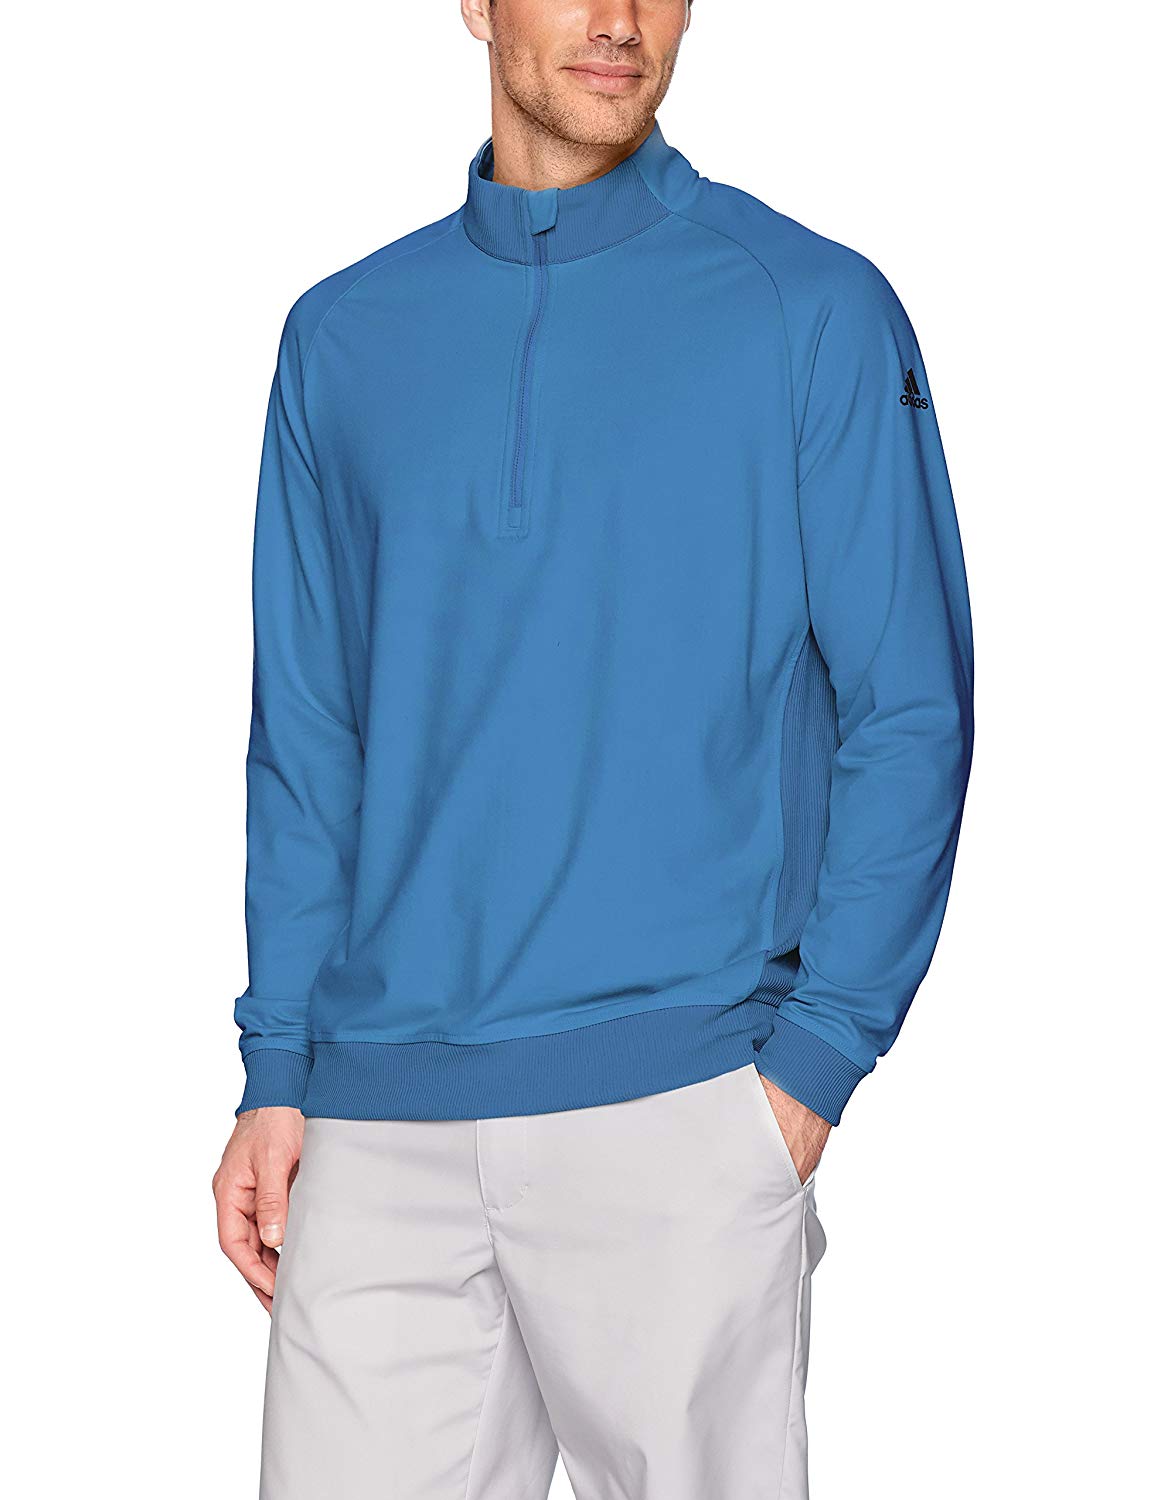 Adidas Mens Classic Club Quarter Zip Golf Pullovers